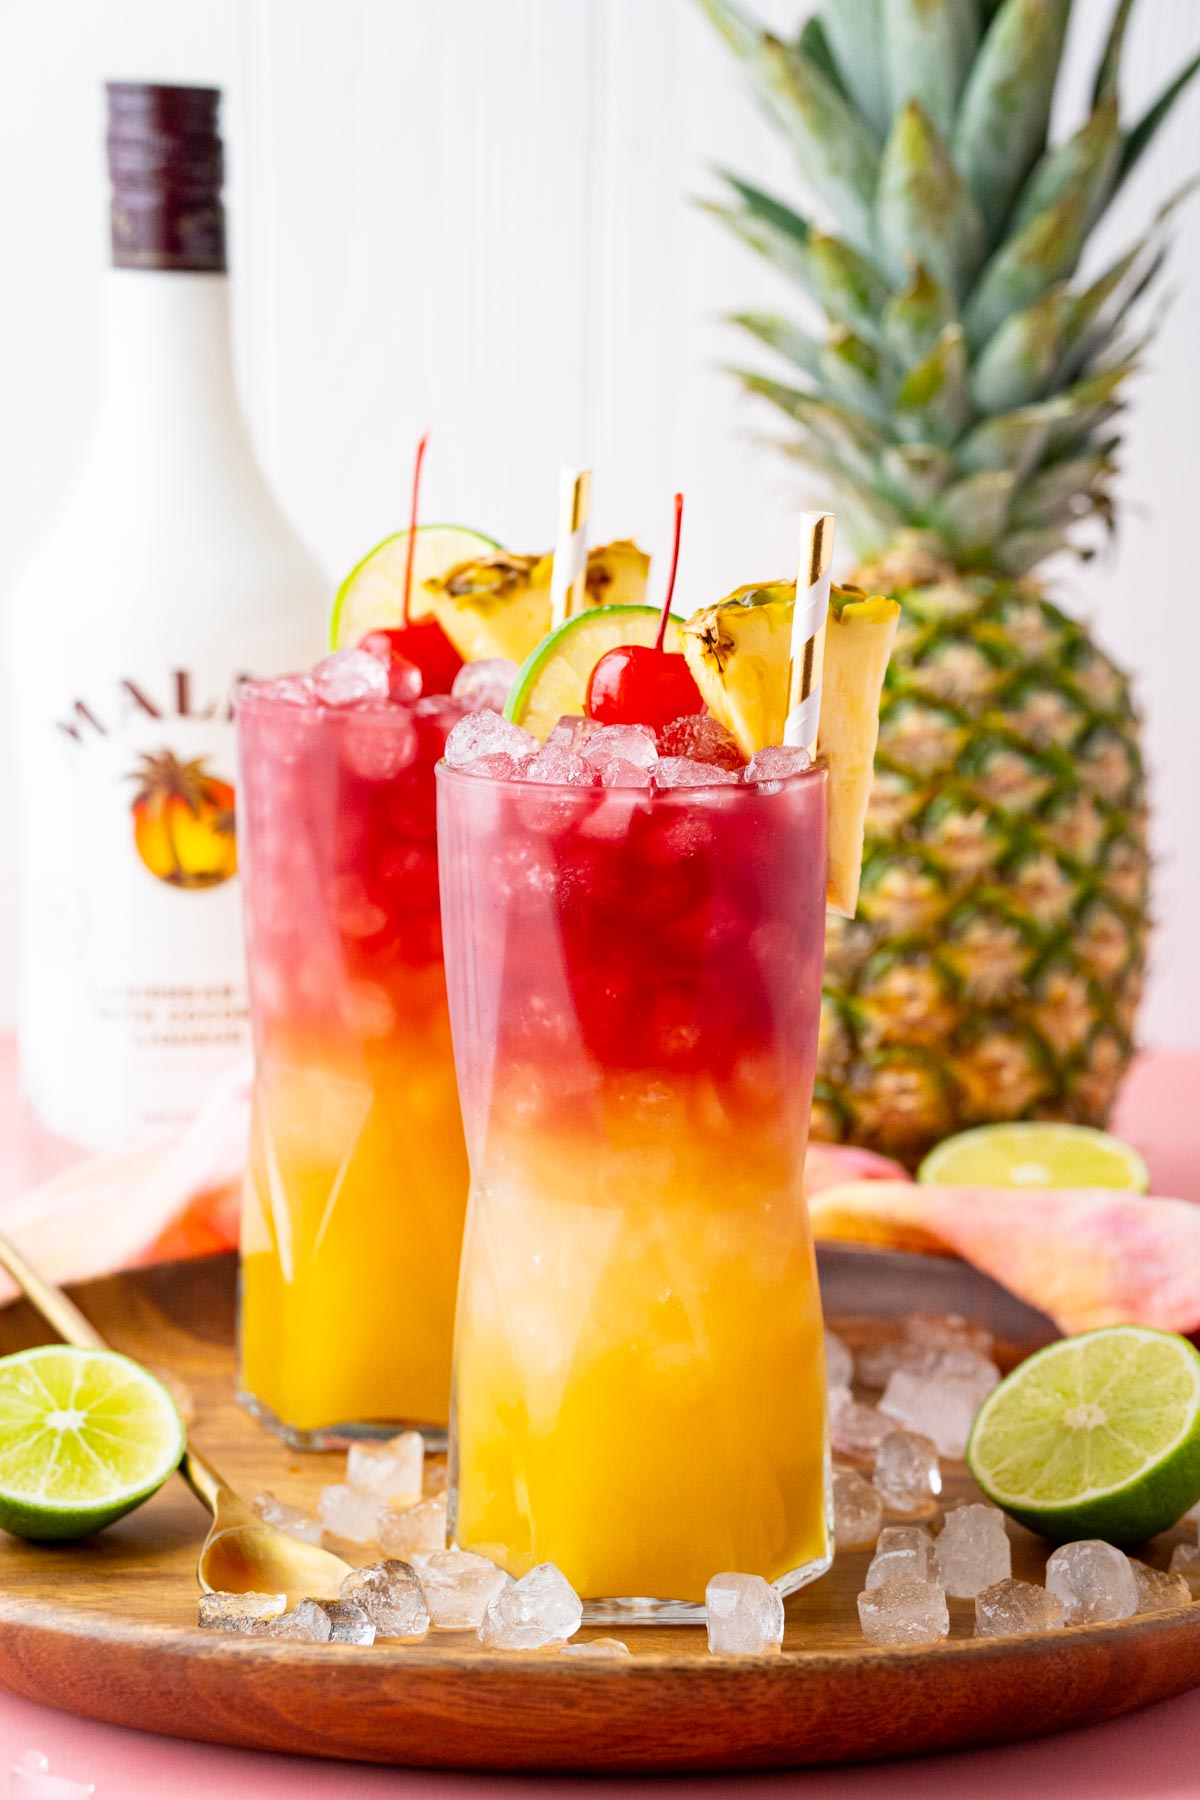 coconut rum pineapple juice and cranberry juice